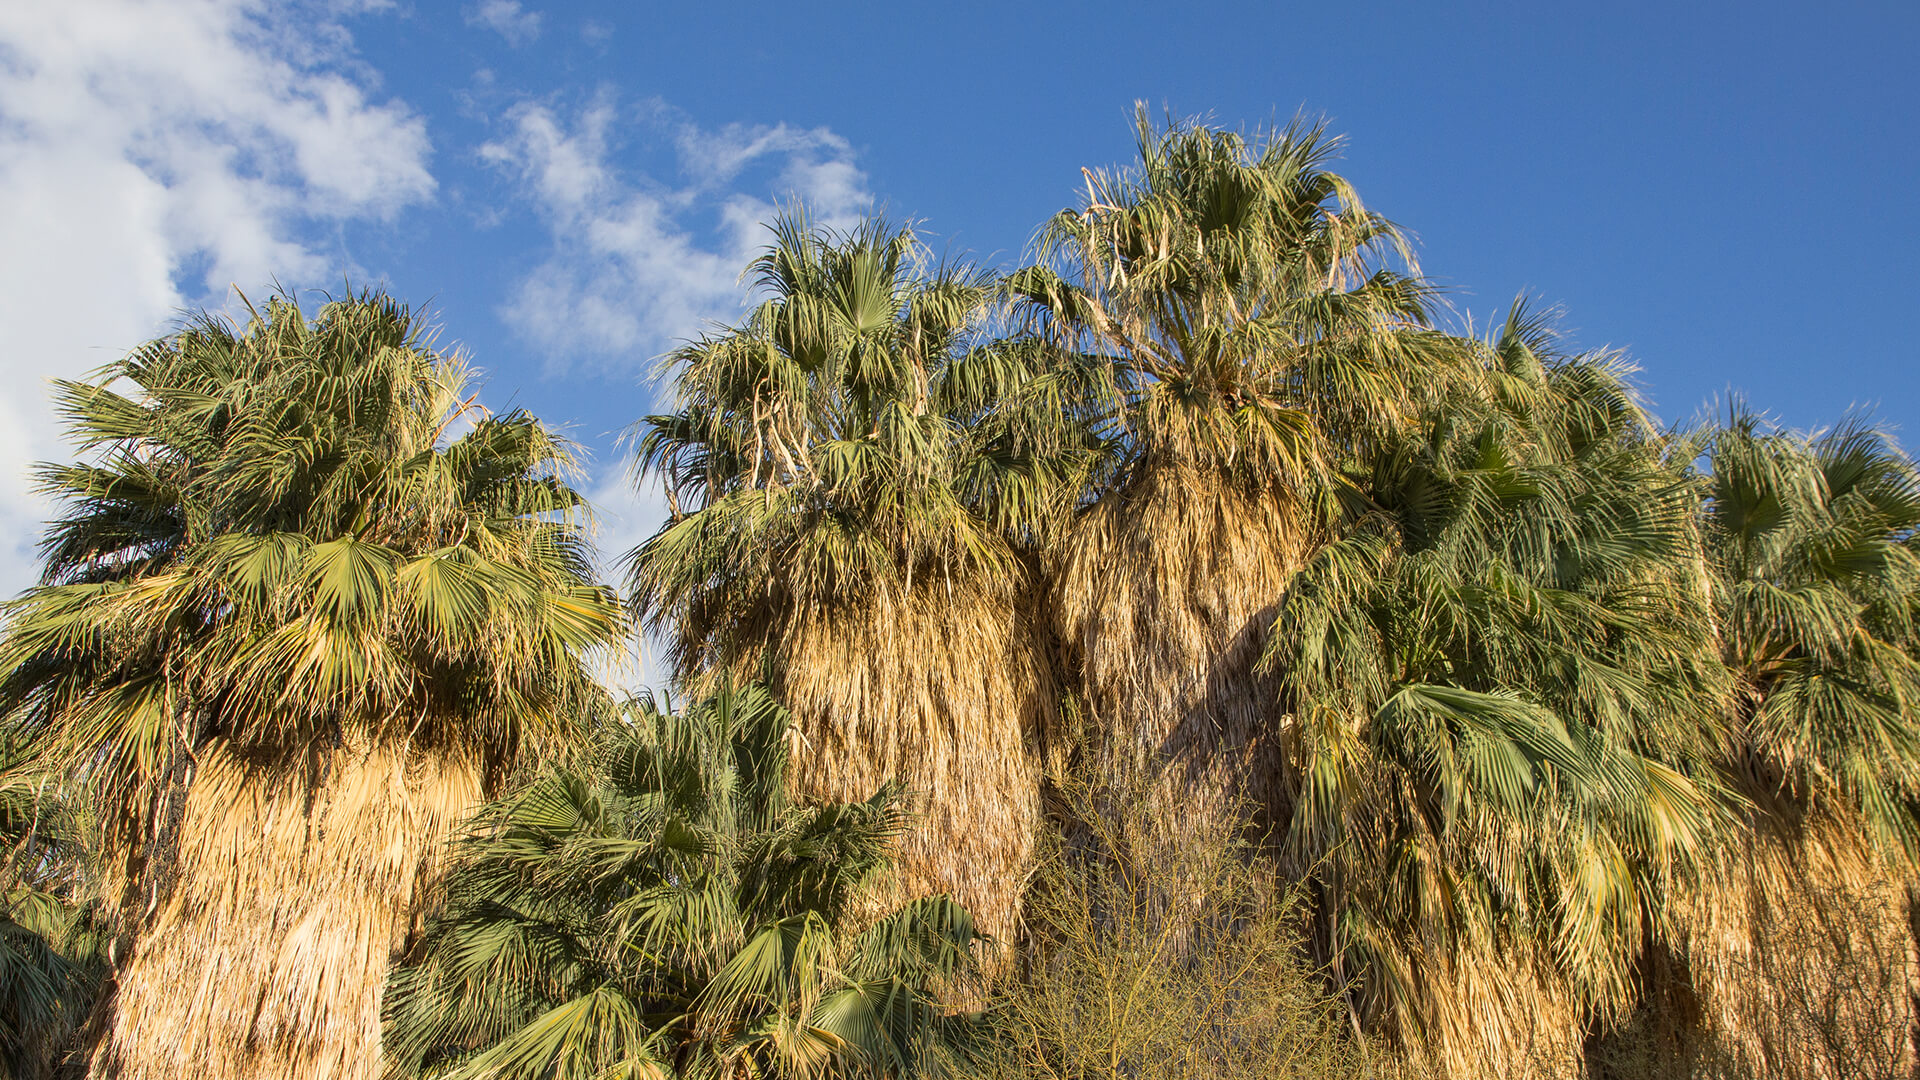 A group of California fan palms against a blue sky